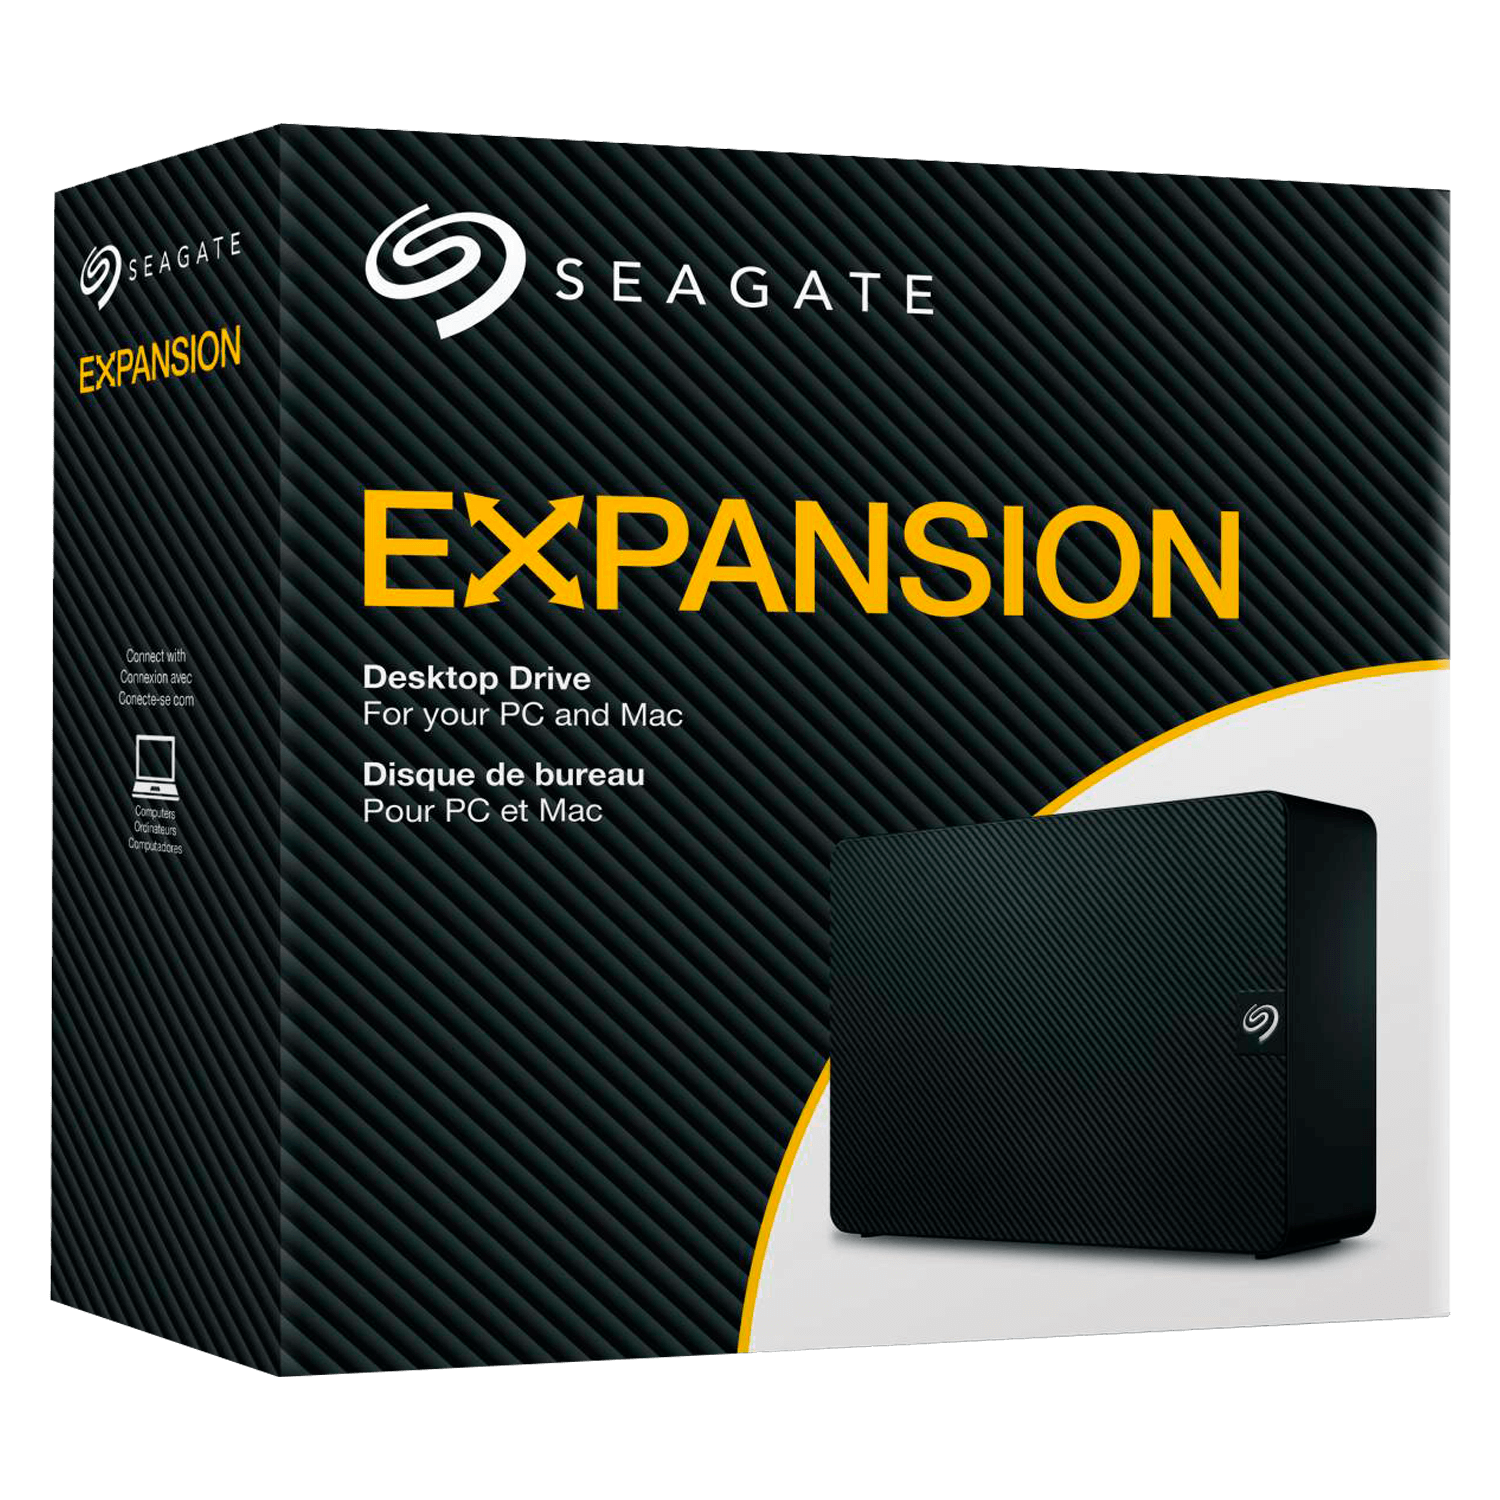 Hd Externo Seagate Expansion 8TB / 3.5" / USB 3.0 - (STEKP8000400)